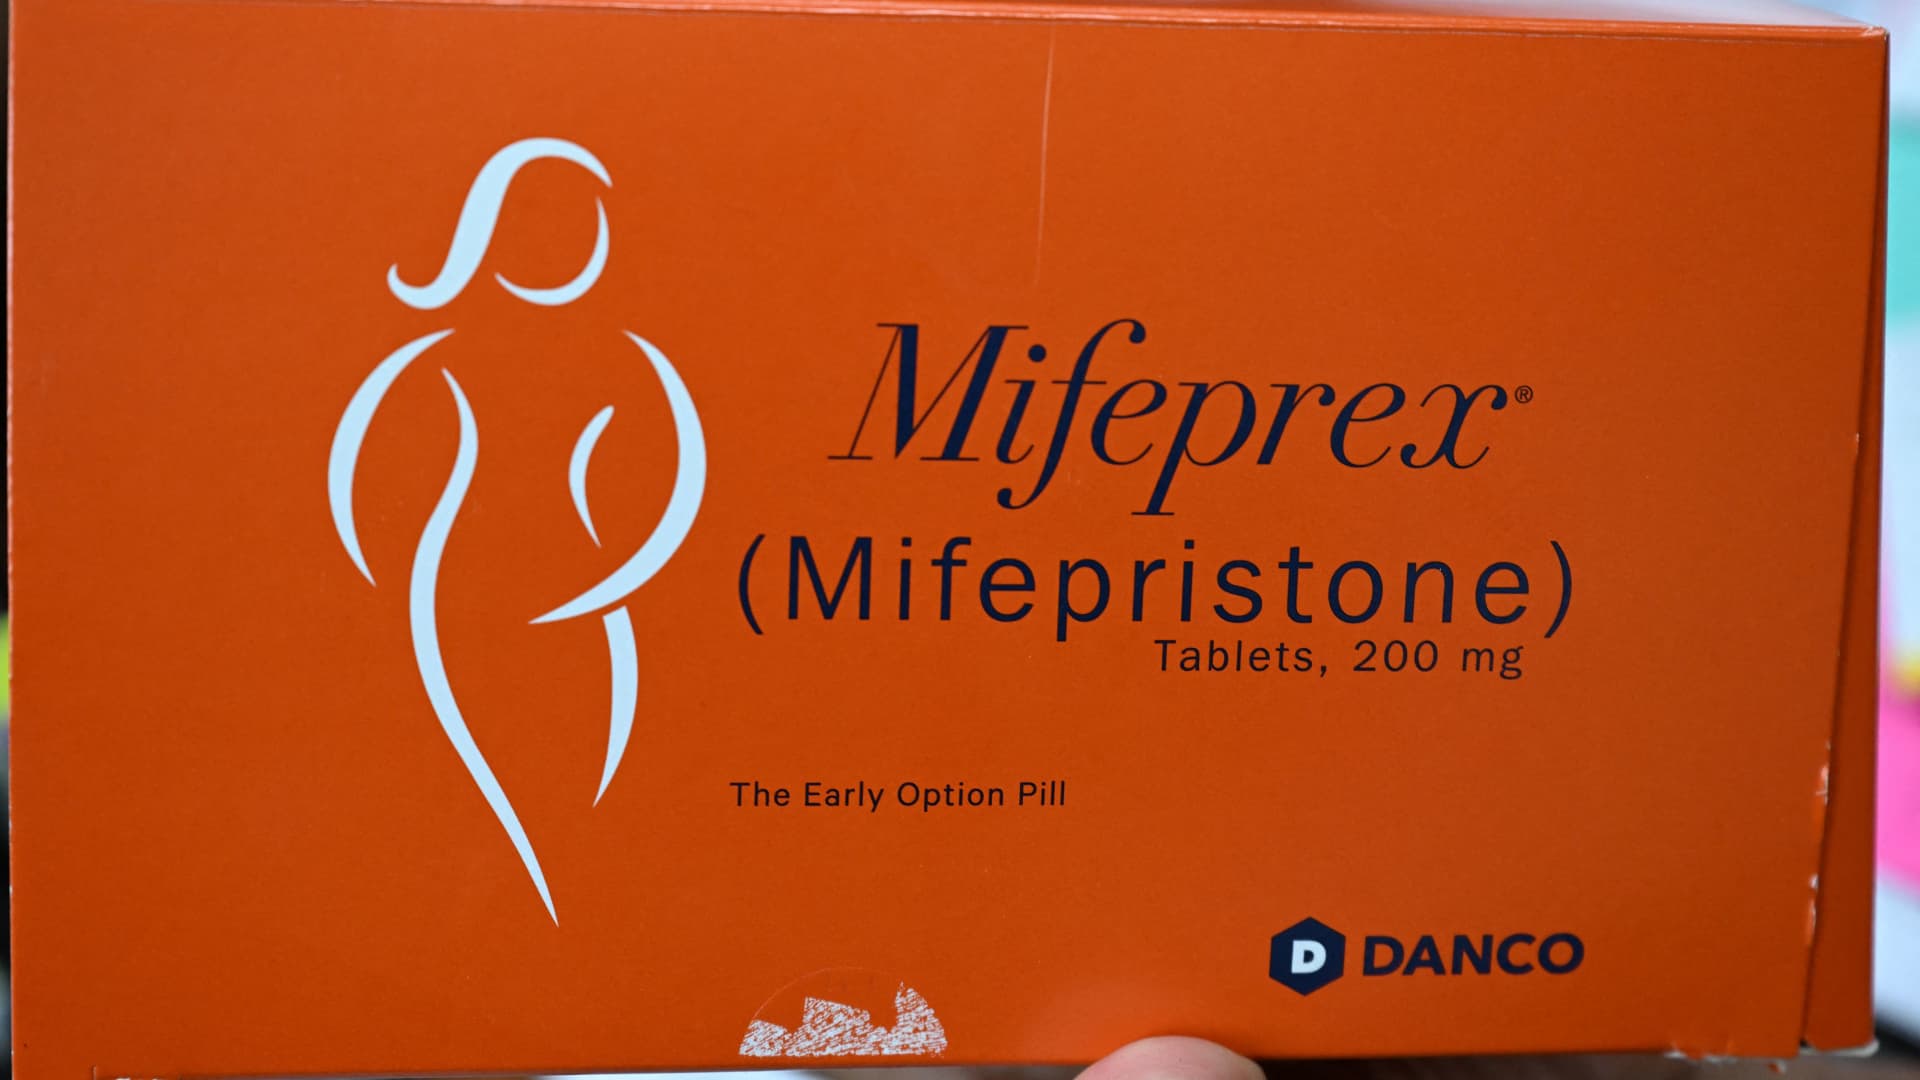 CVS and Walgreens will sell mifepristone in pharmacies